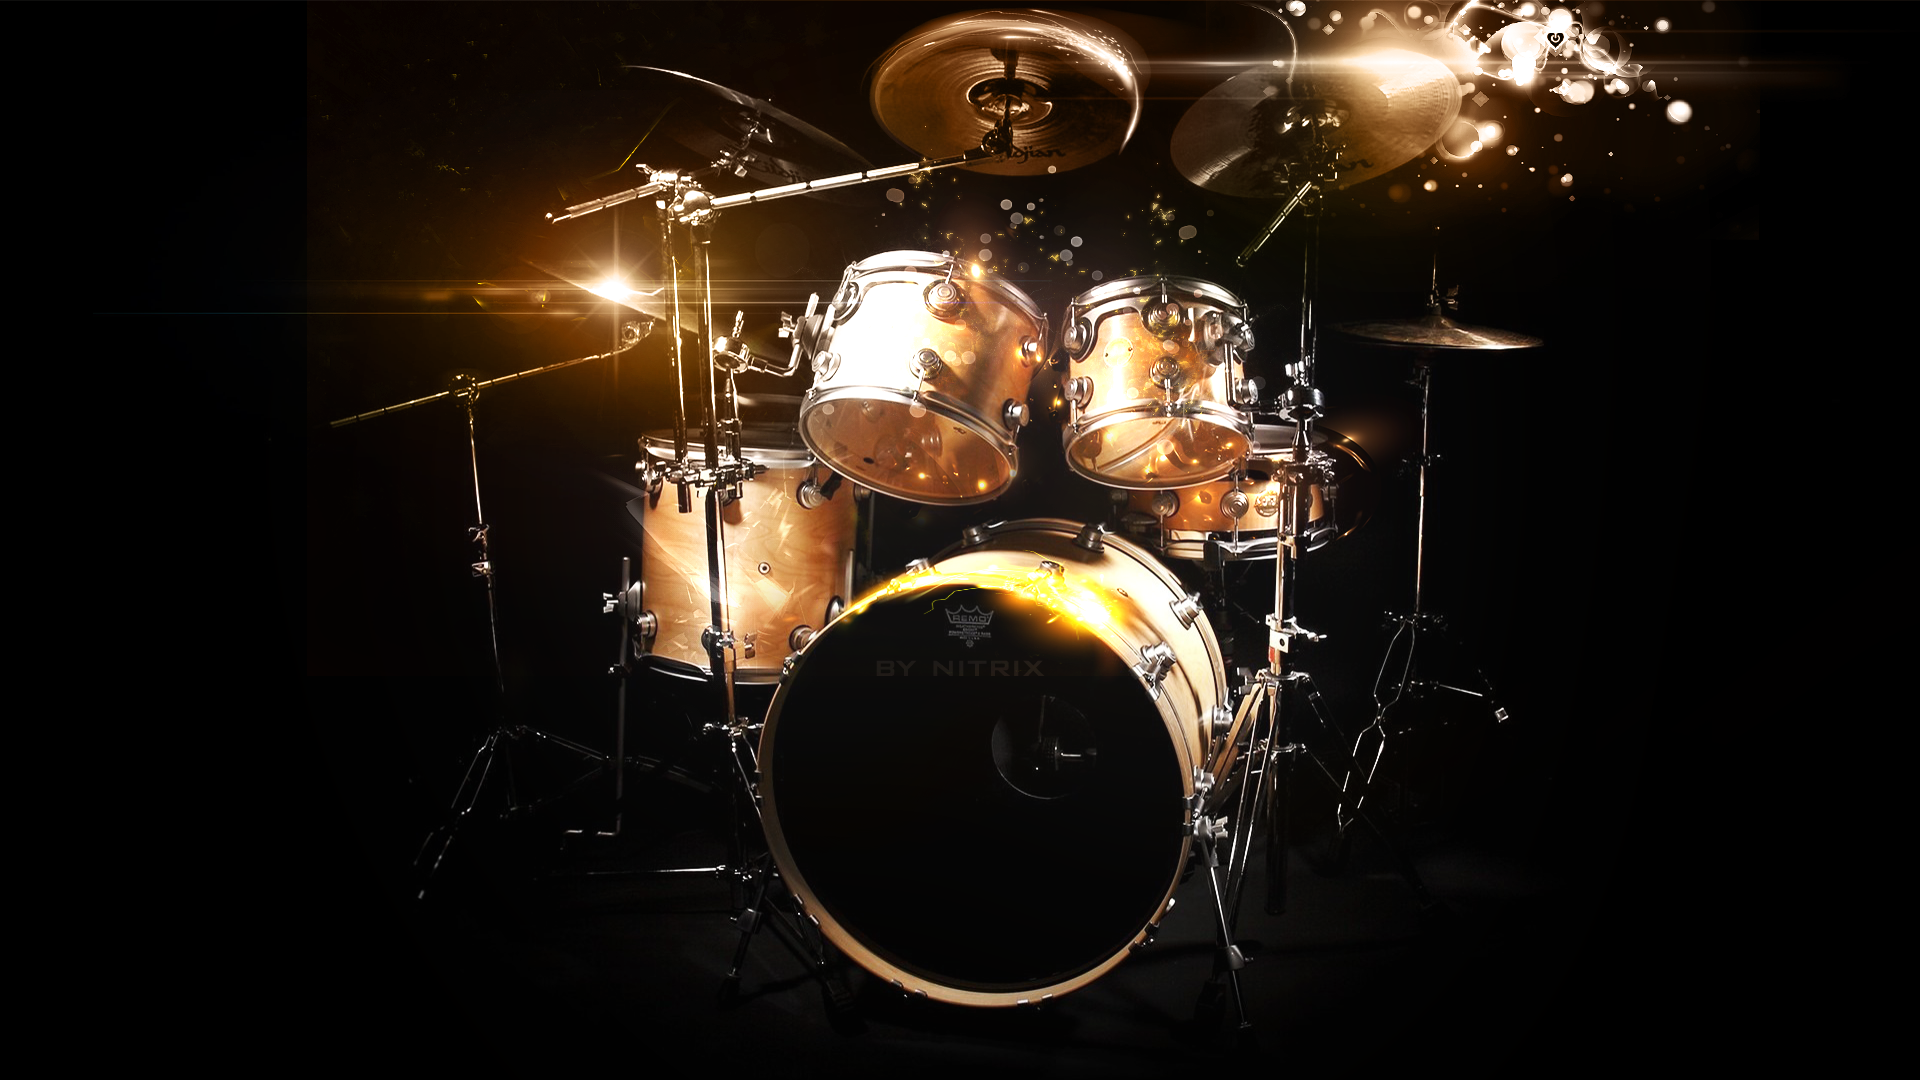 drum wallpaper iphone,drum,drums,drummer,bass drum,gong bass drum